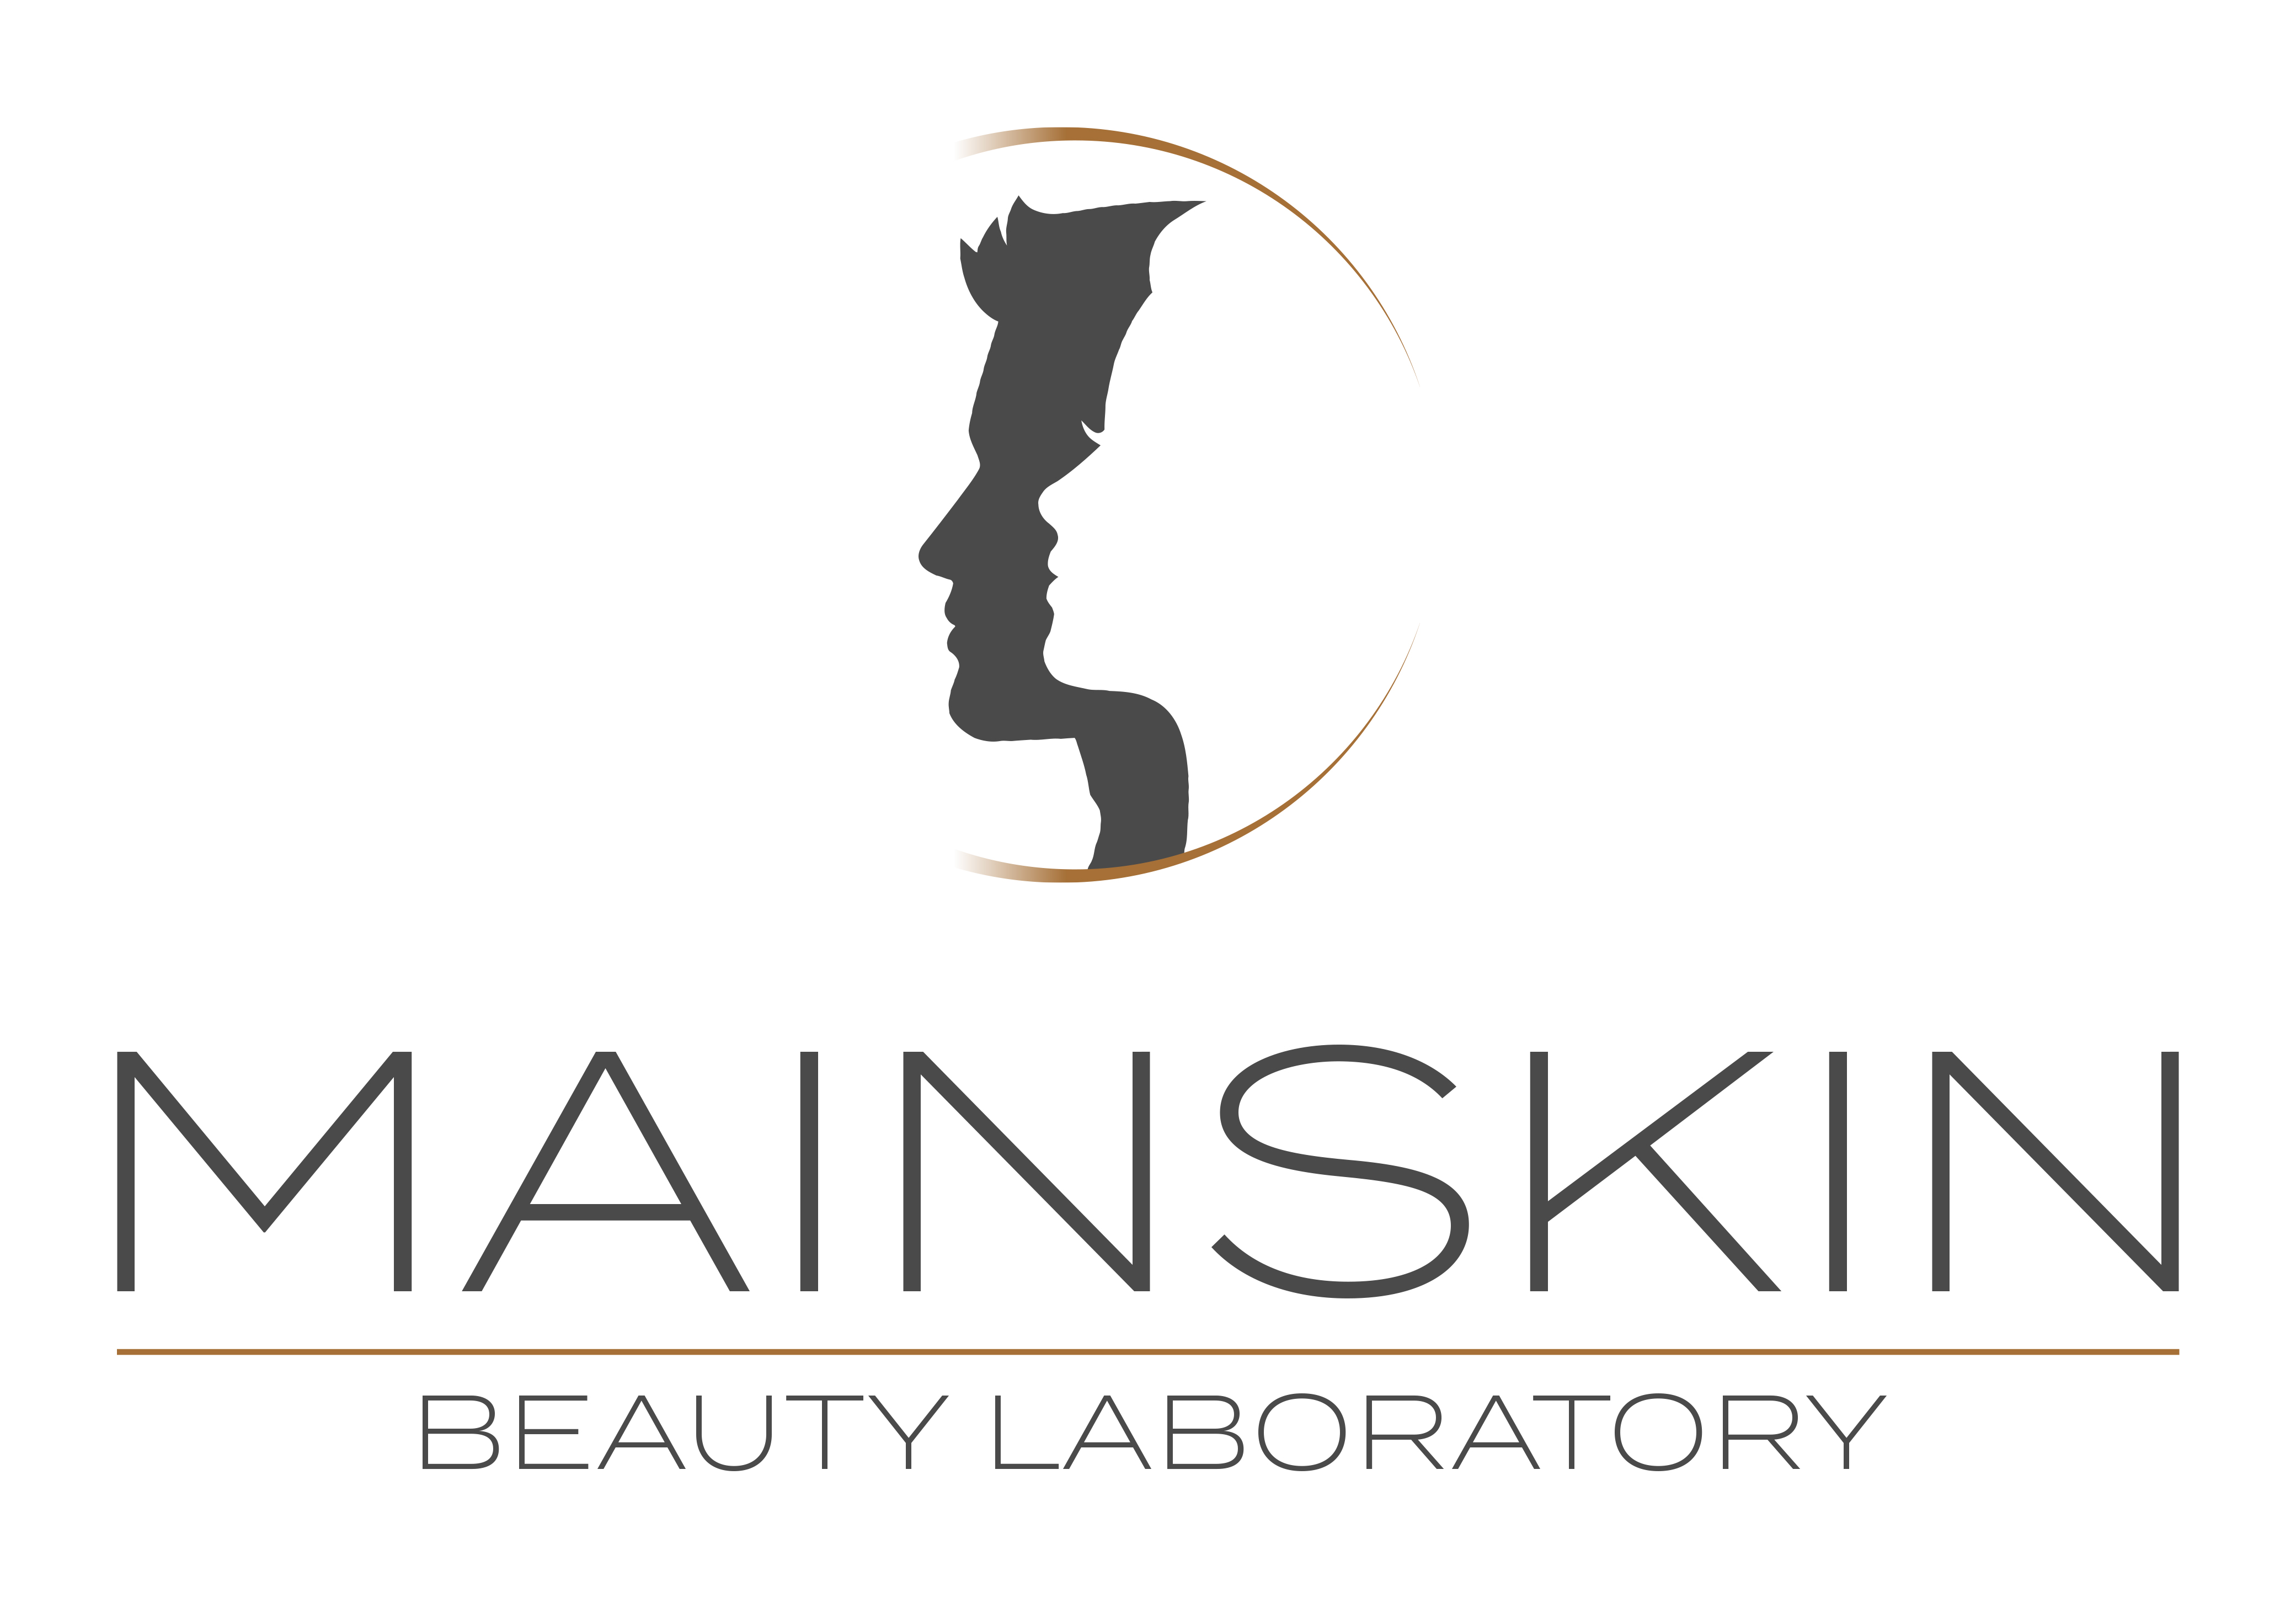 MAINSKIN Beauty Laboratory Logo